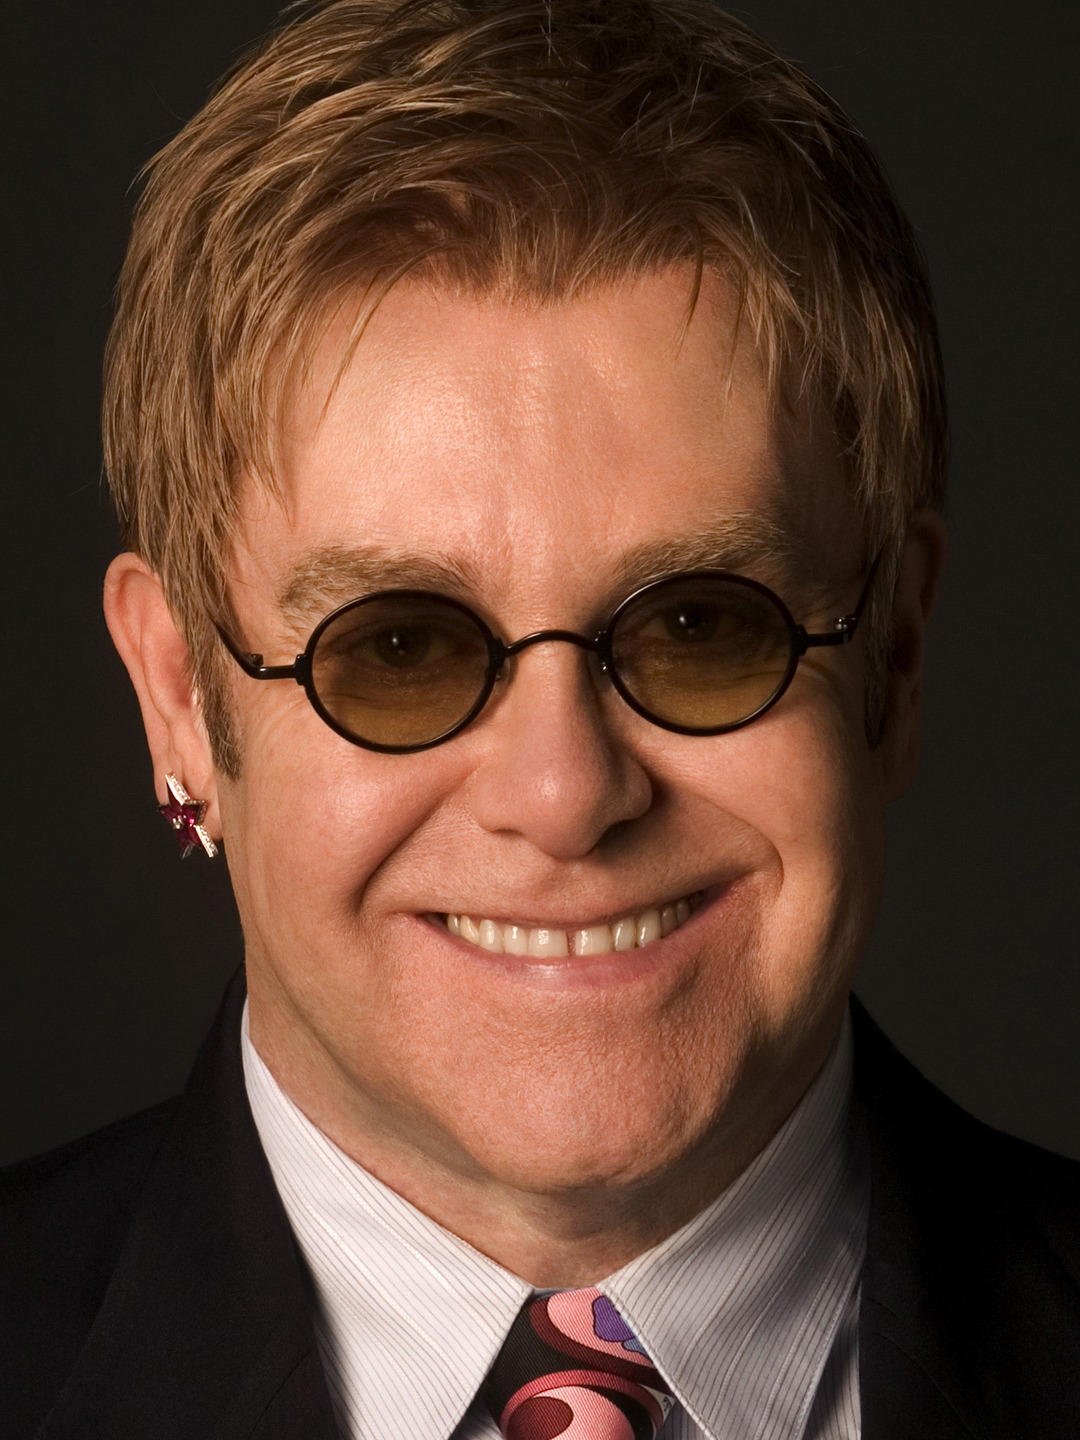 Elton John early career